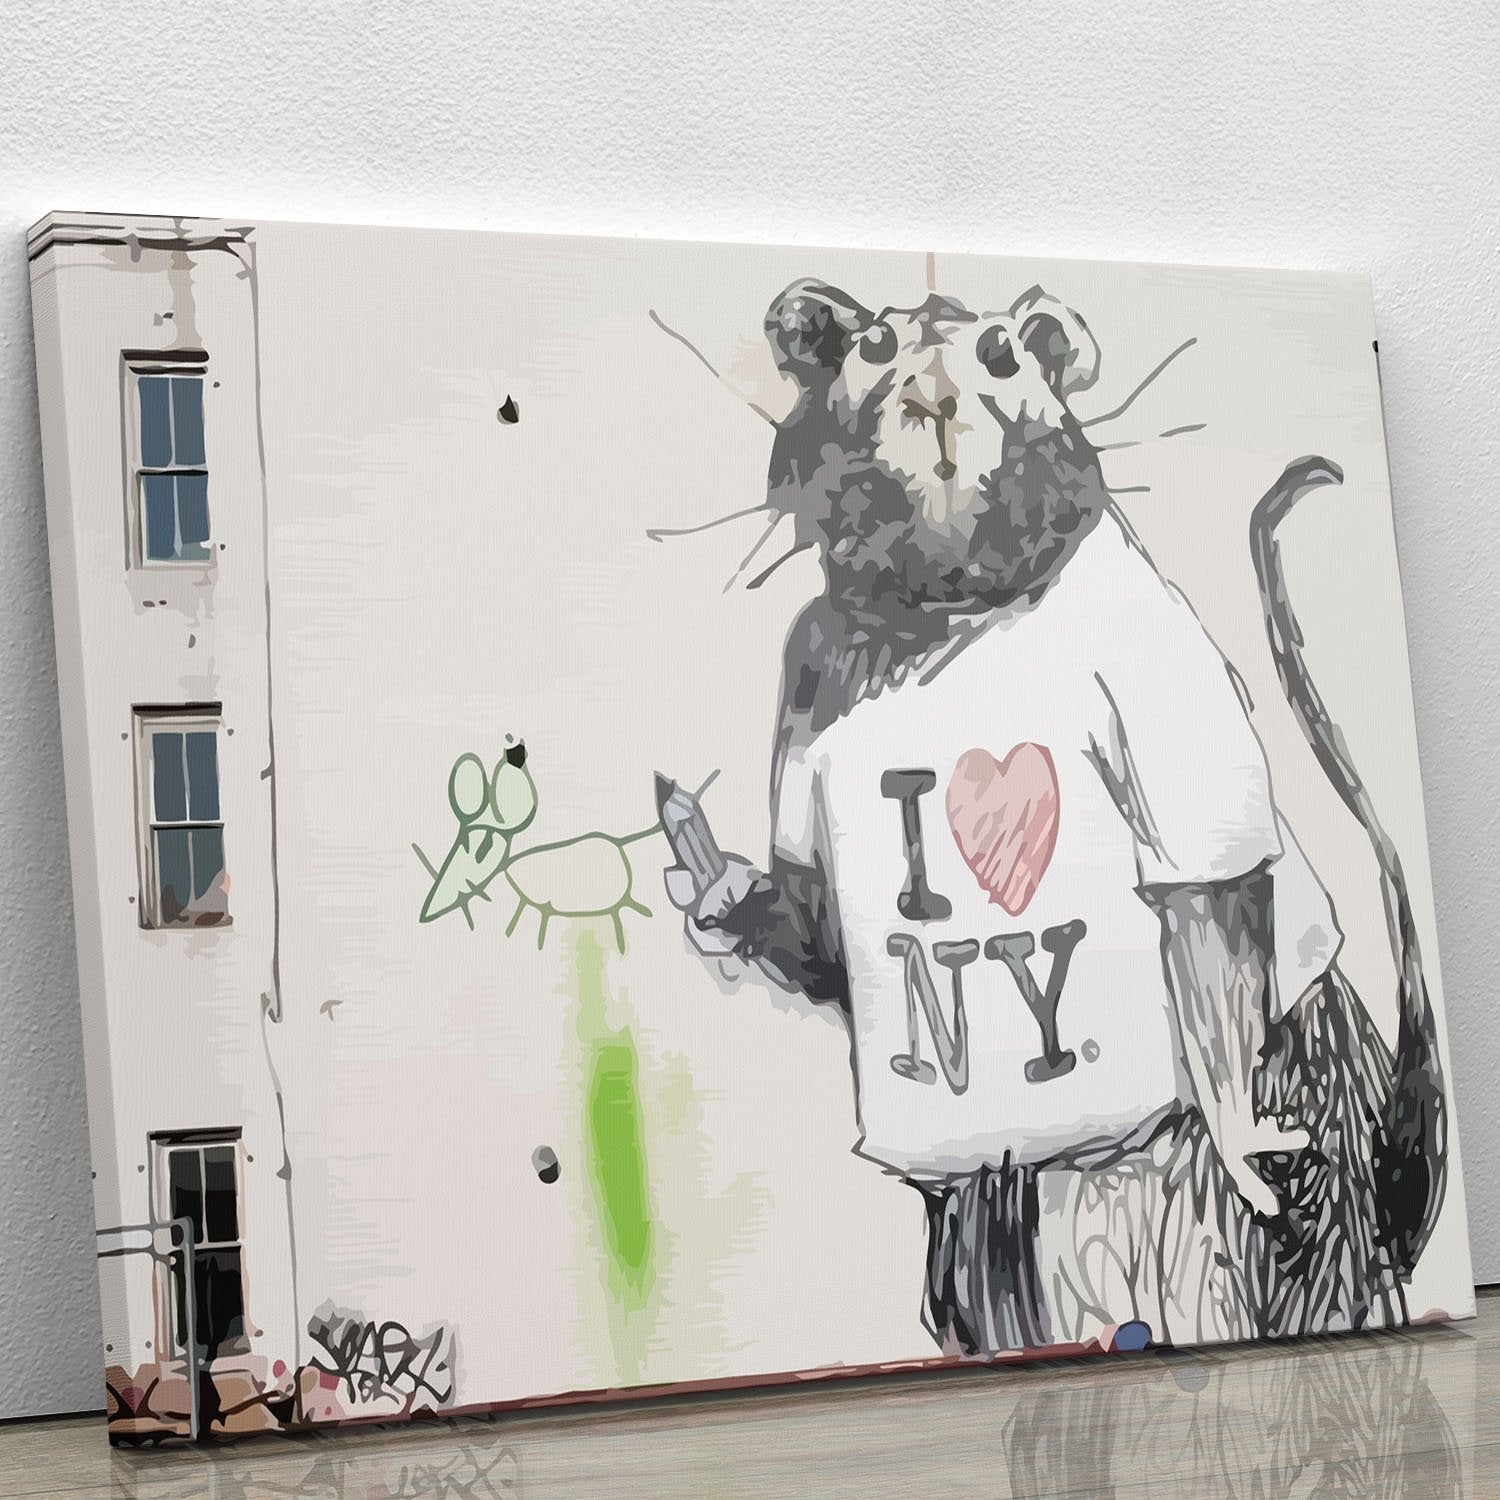 Banksy Rat I Love New York Canvas Print or Poster